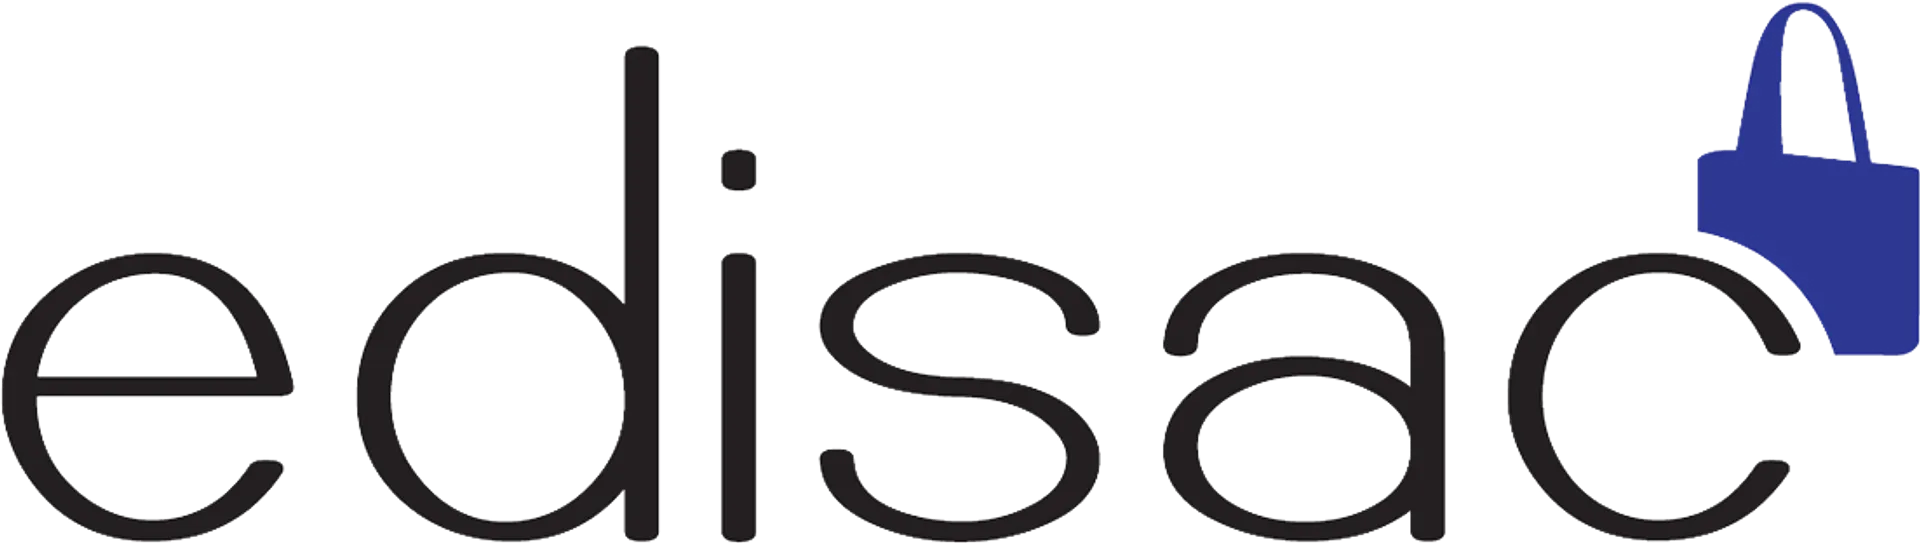 EDISAC logo